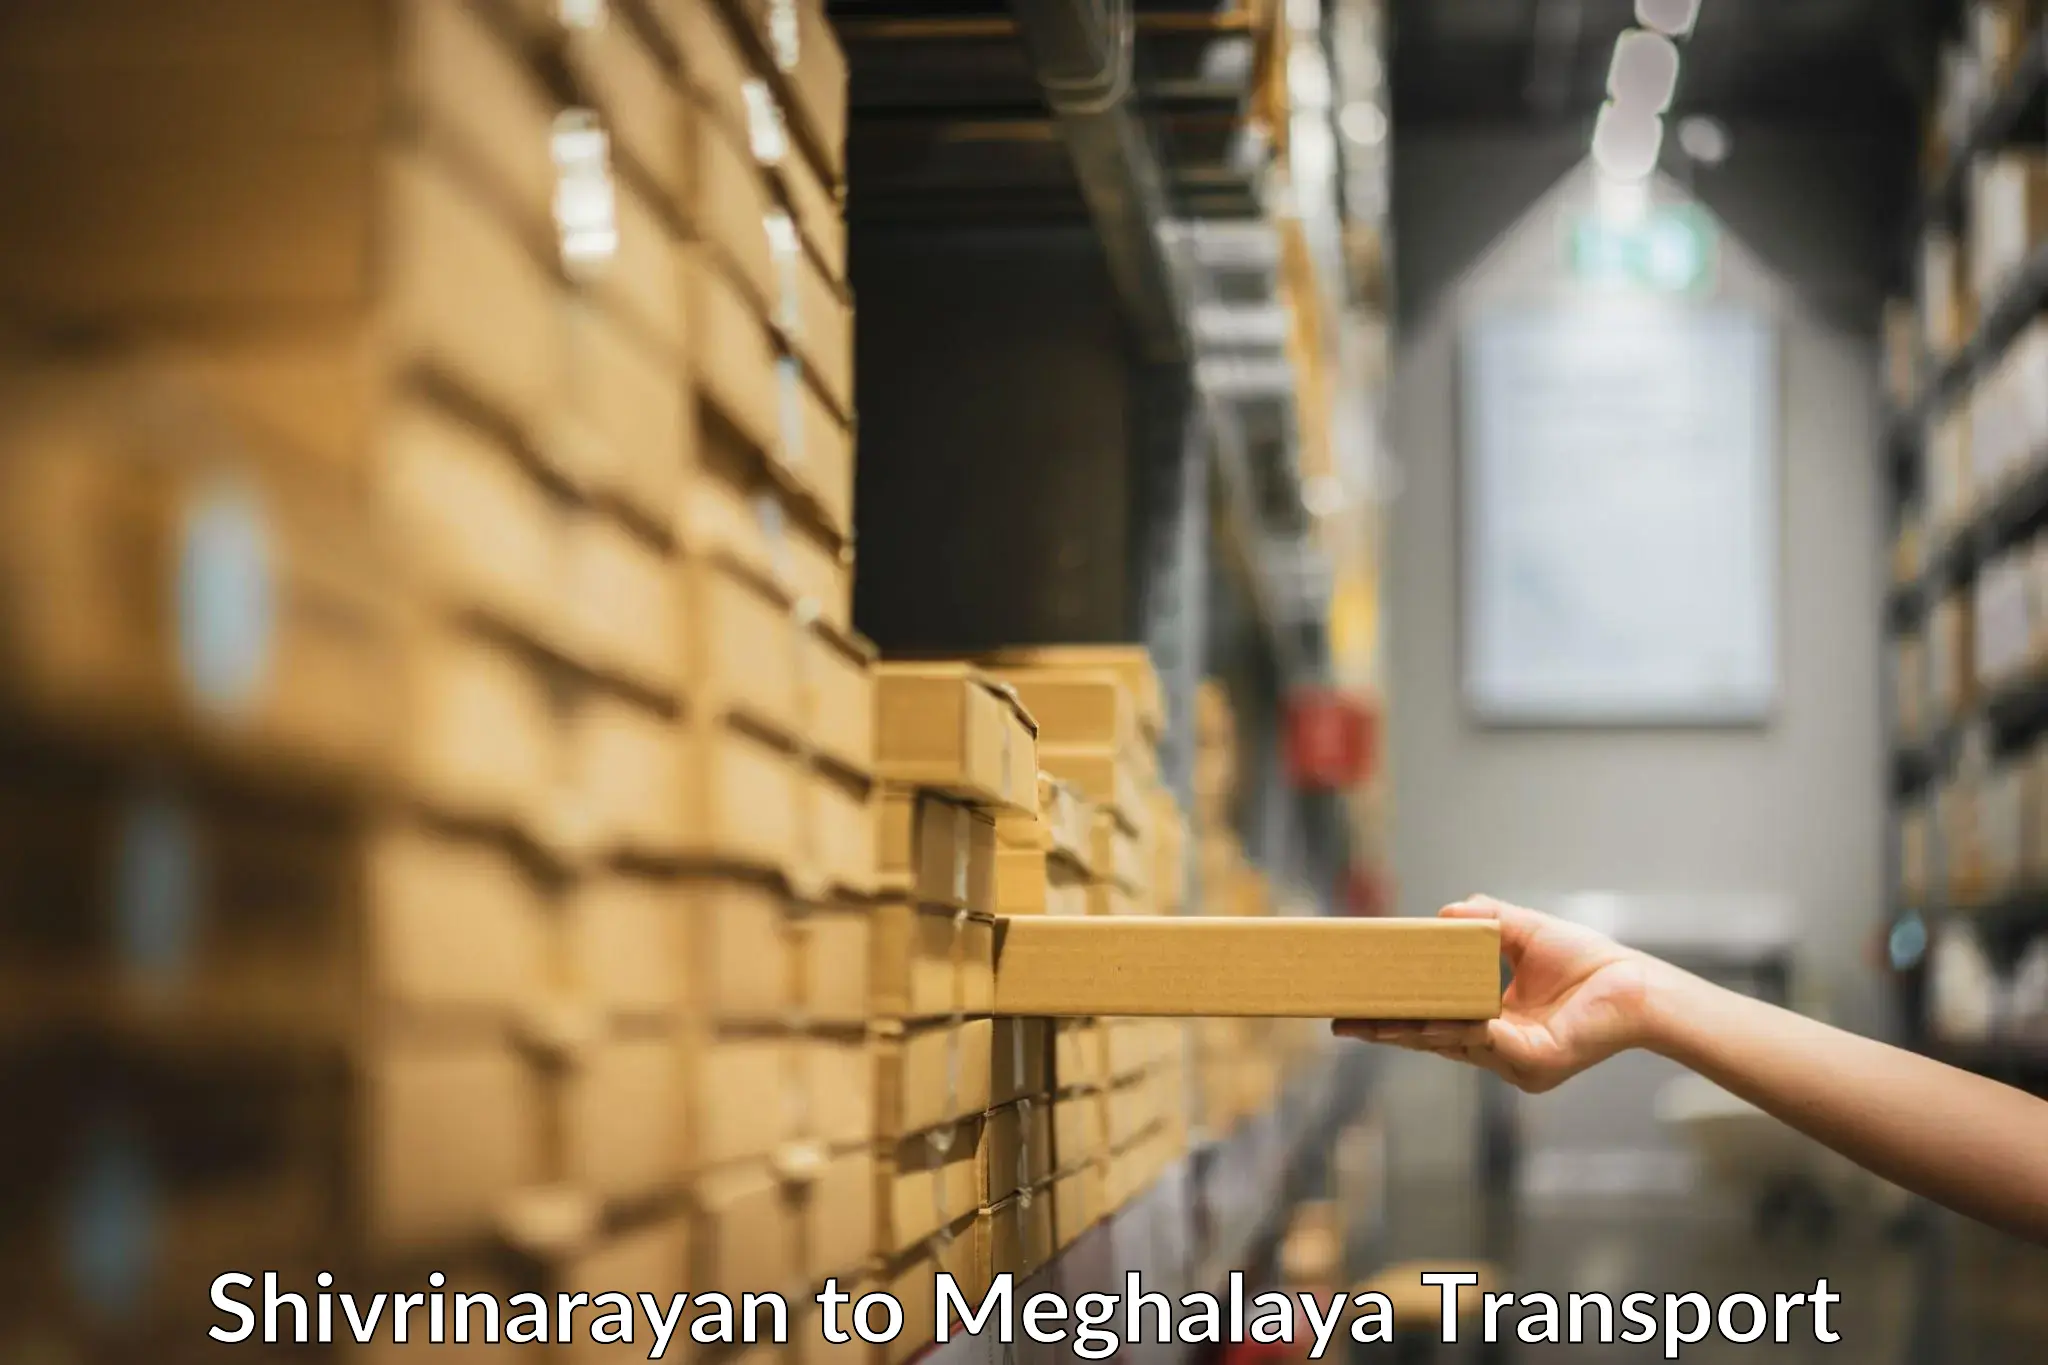 Truck transport companies in India Shivrinarayan to Meghalaya